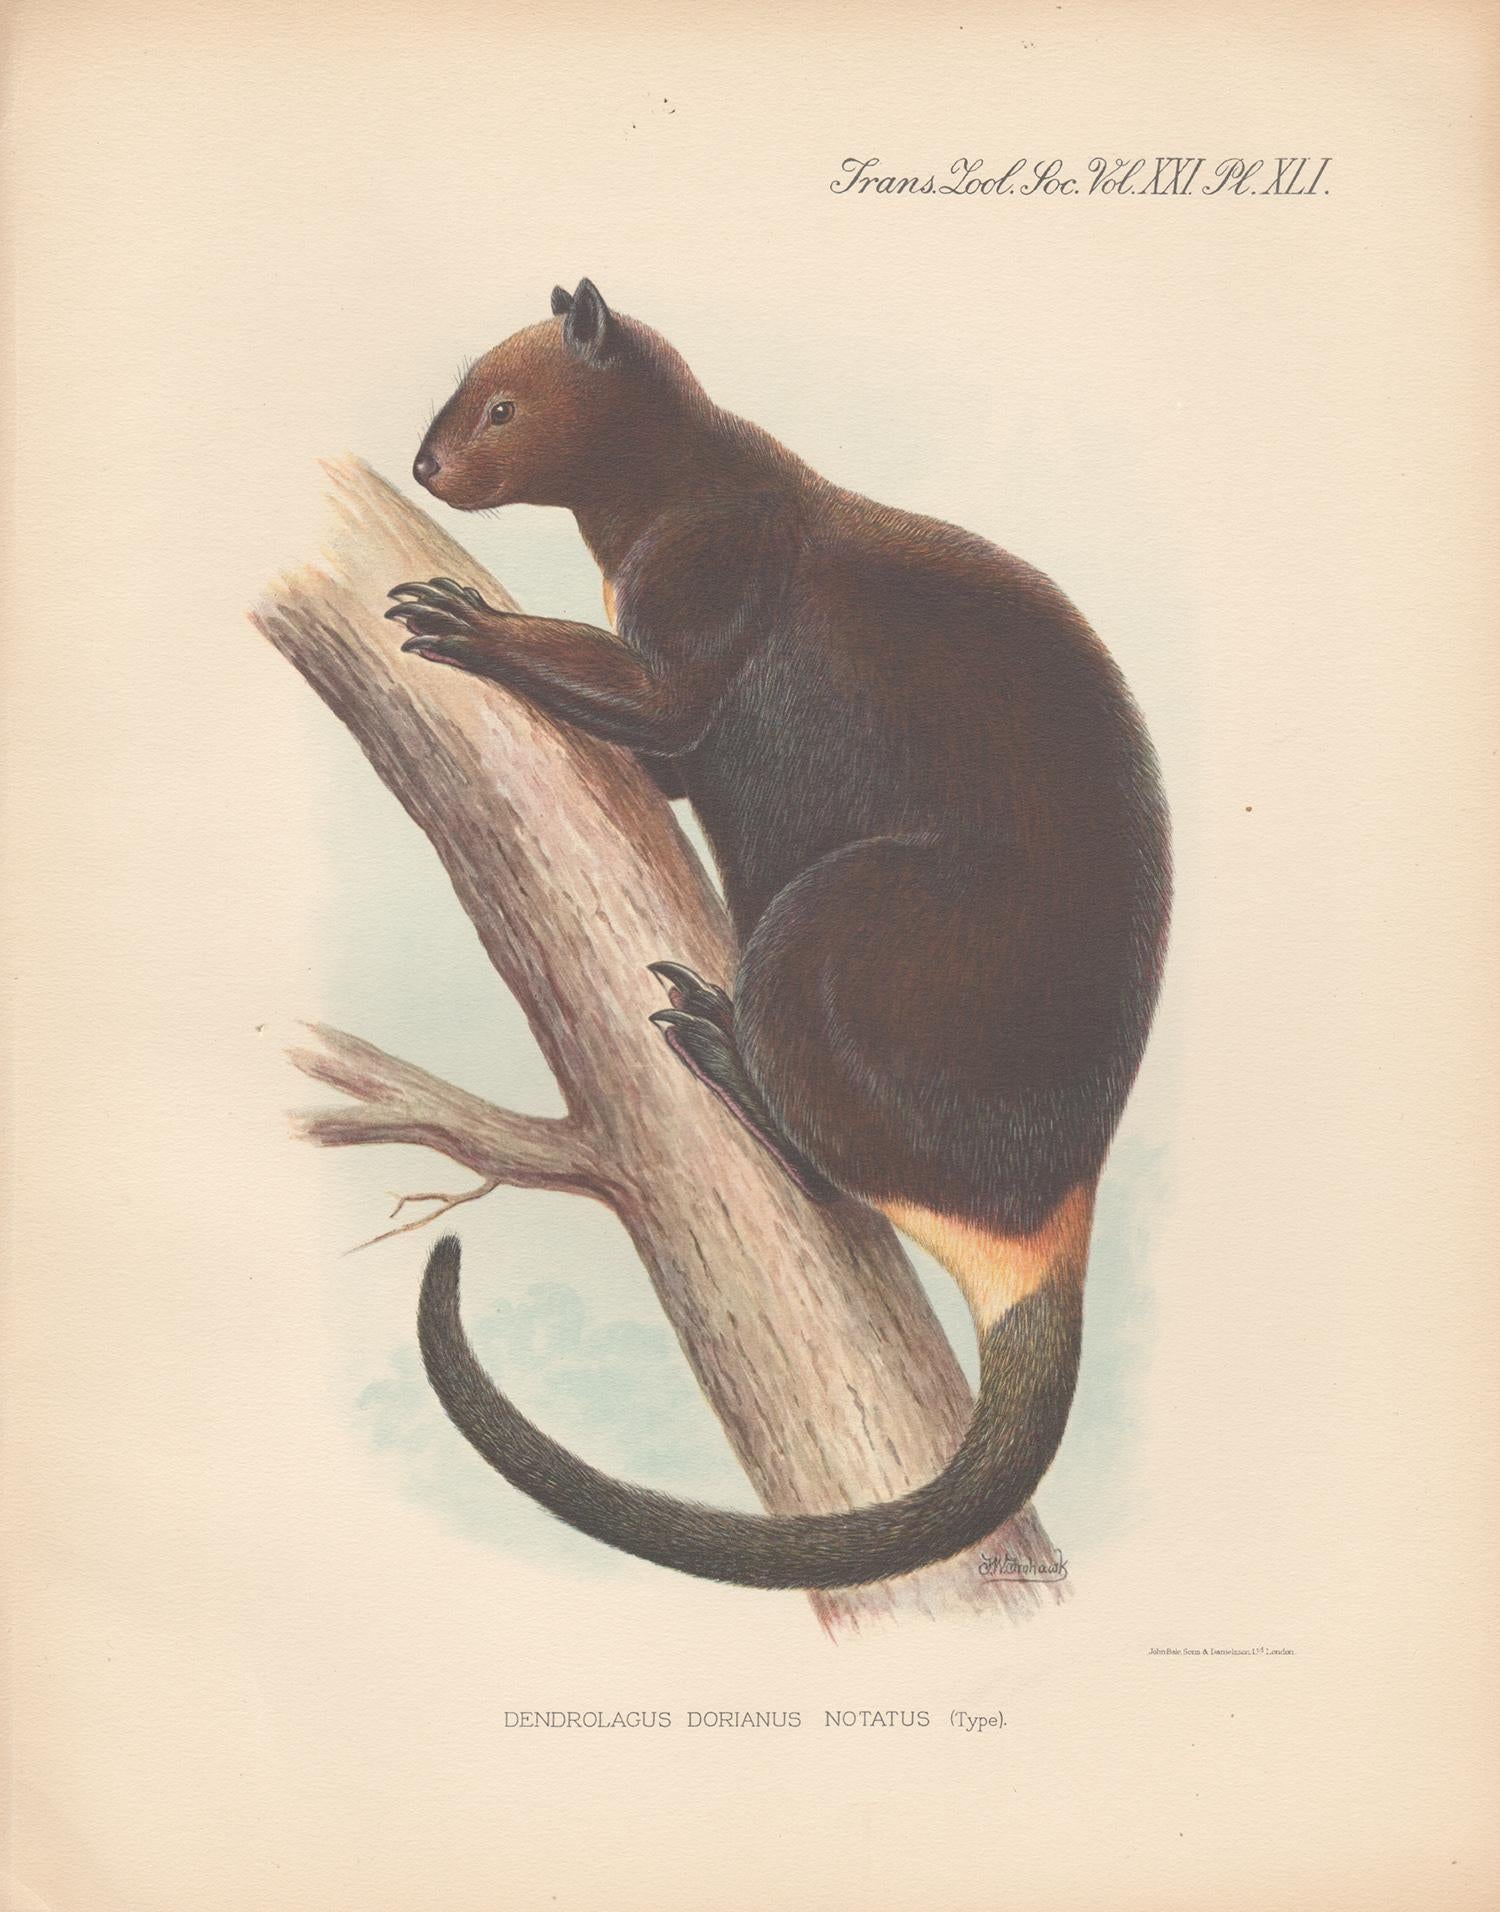 Frederick William Frohawk Animal Print - Doria's Tree Kangaroo, New Guinea, natural history lithograph, 1936